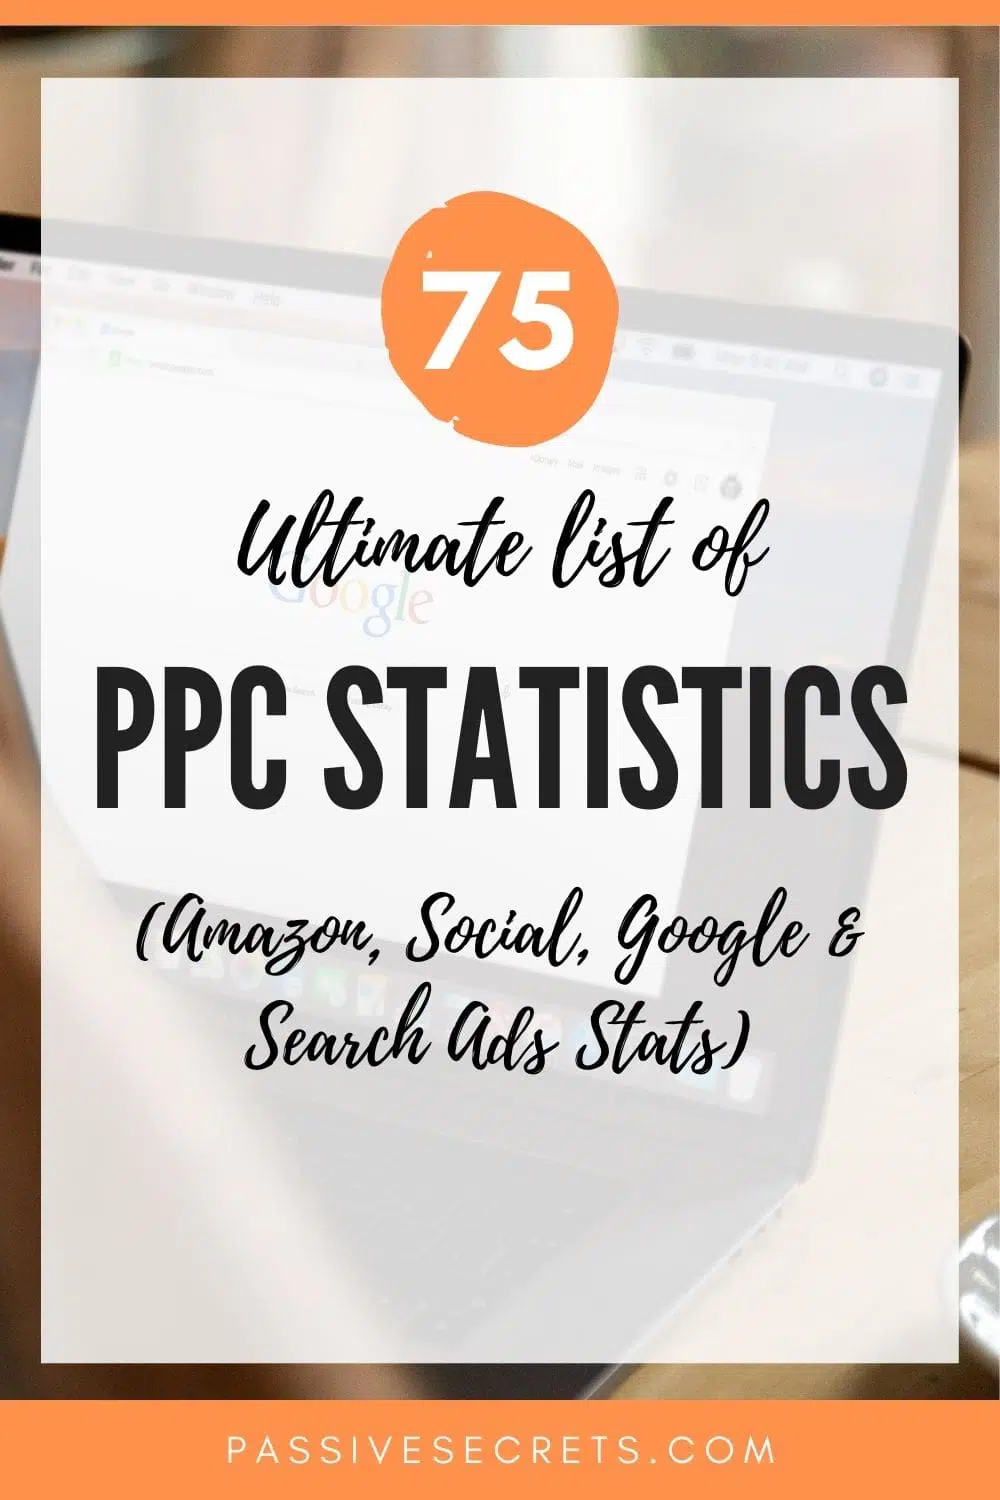 ppc statistics google ads stats Passive Secrets